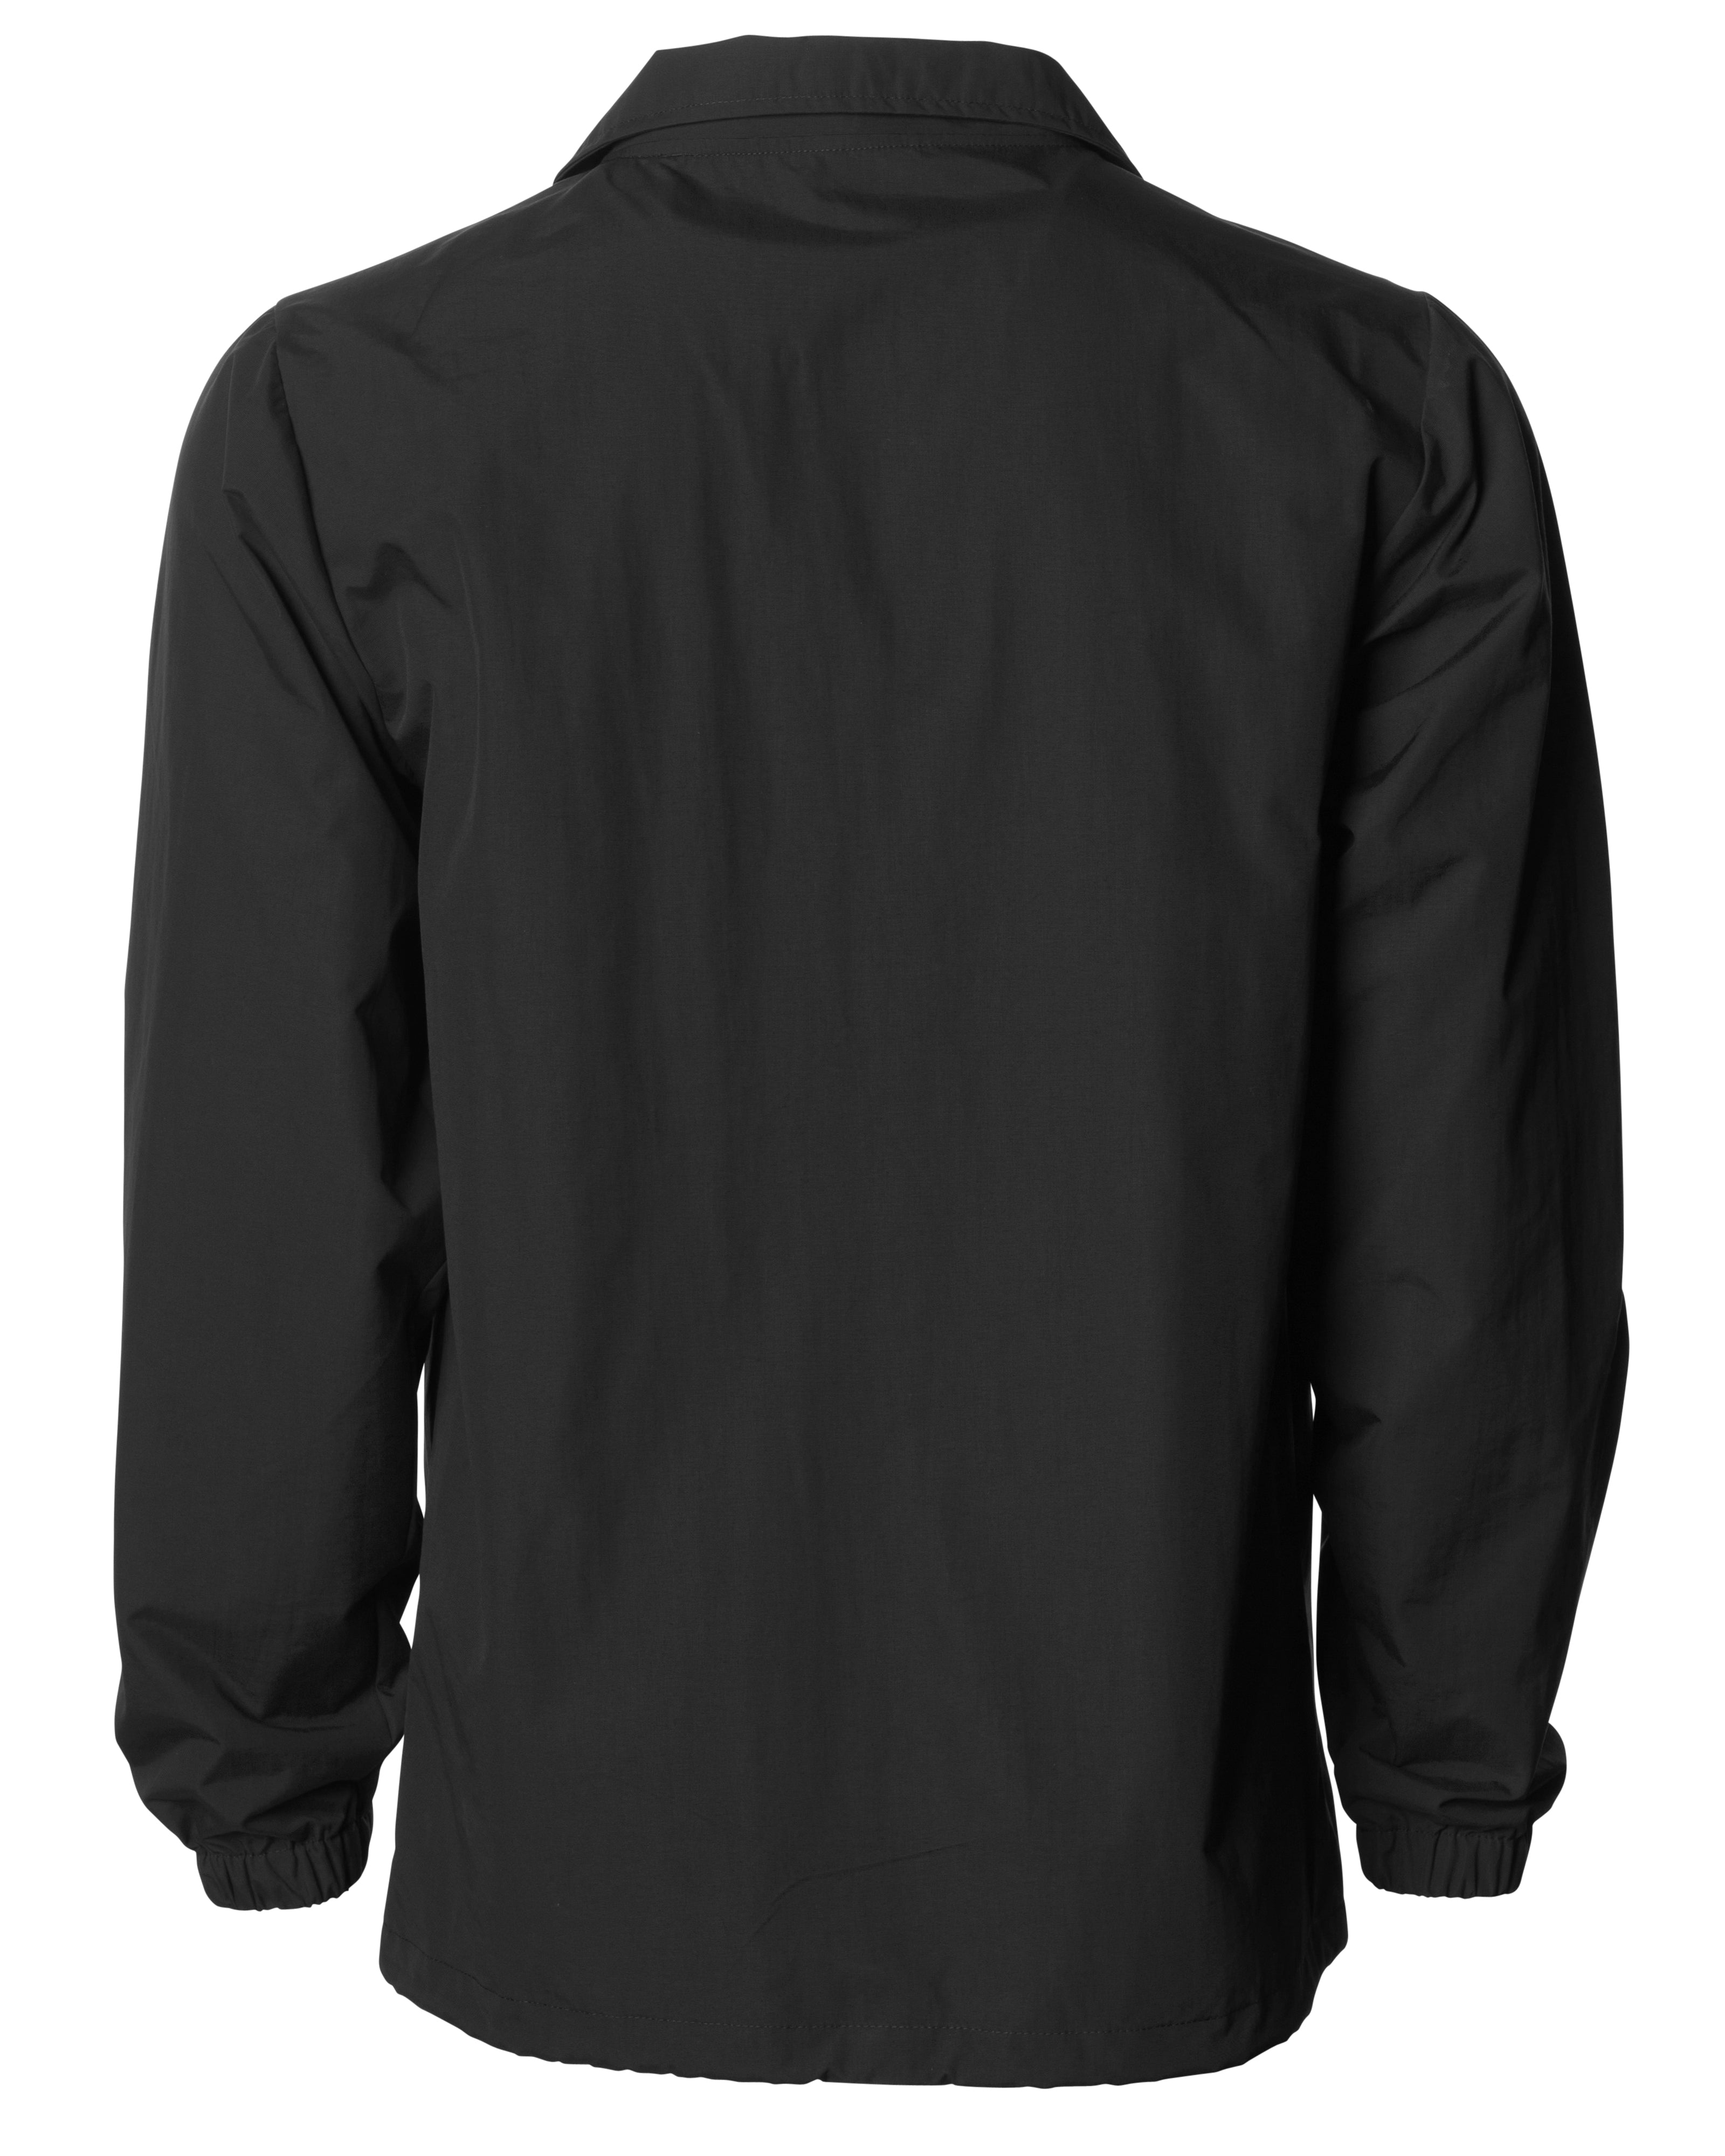 Download Nylon Waterproof Coach Jacket Global Blank